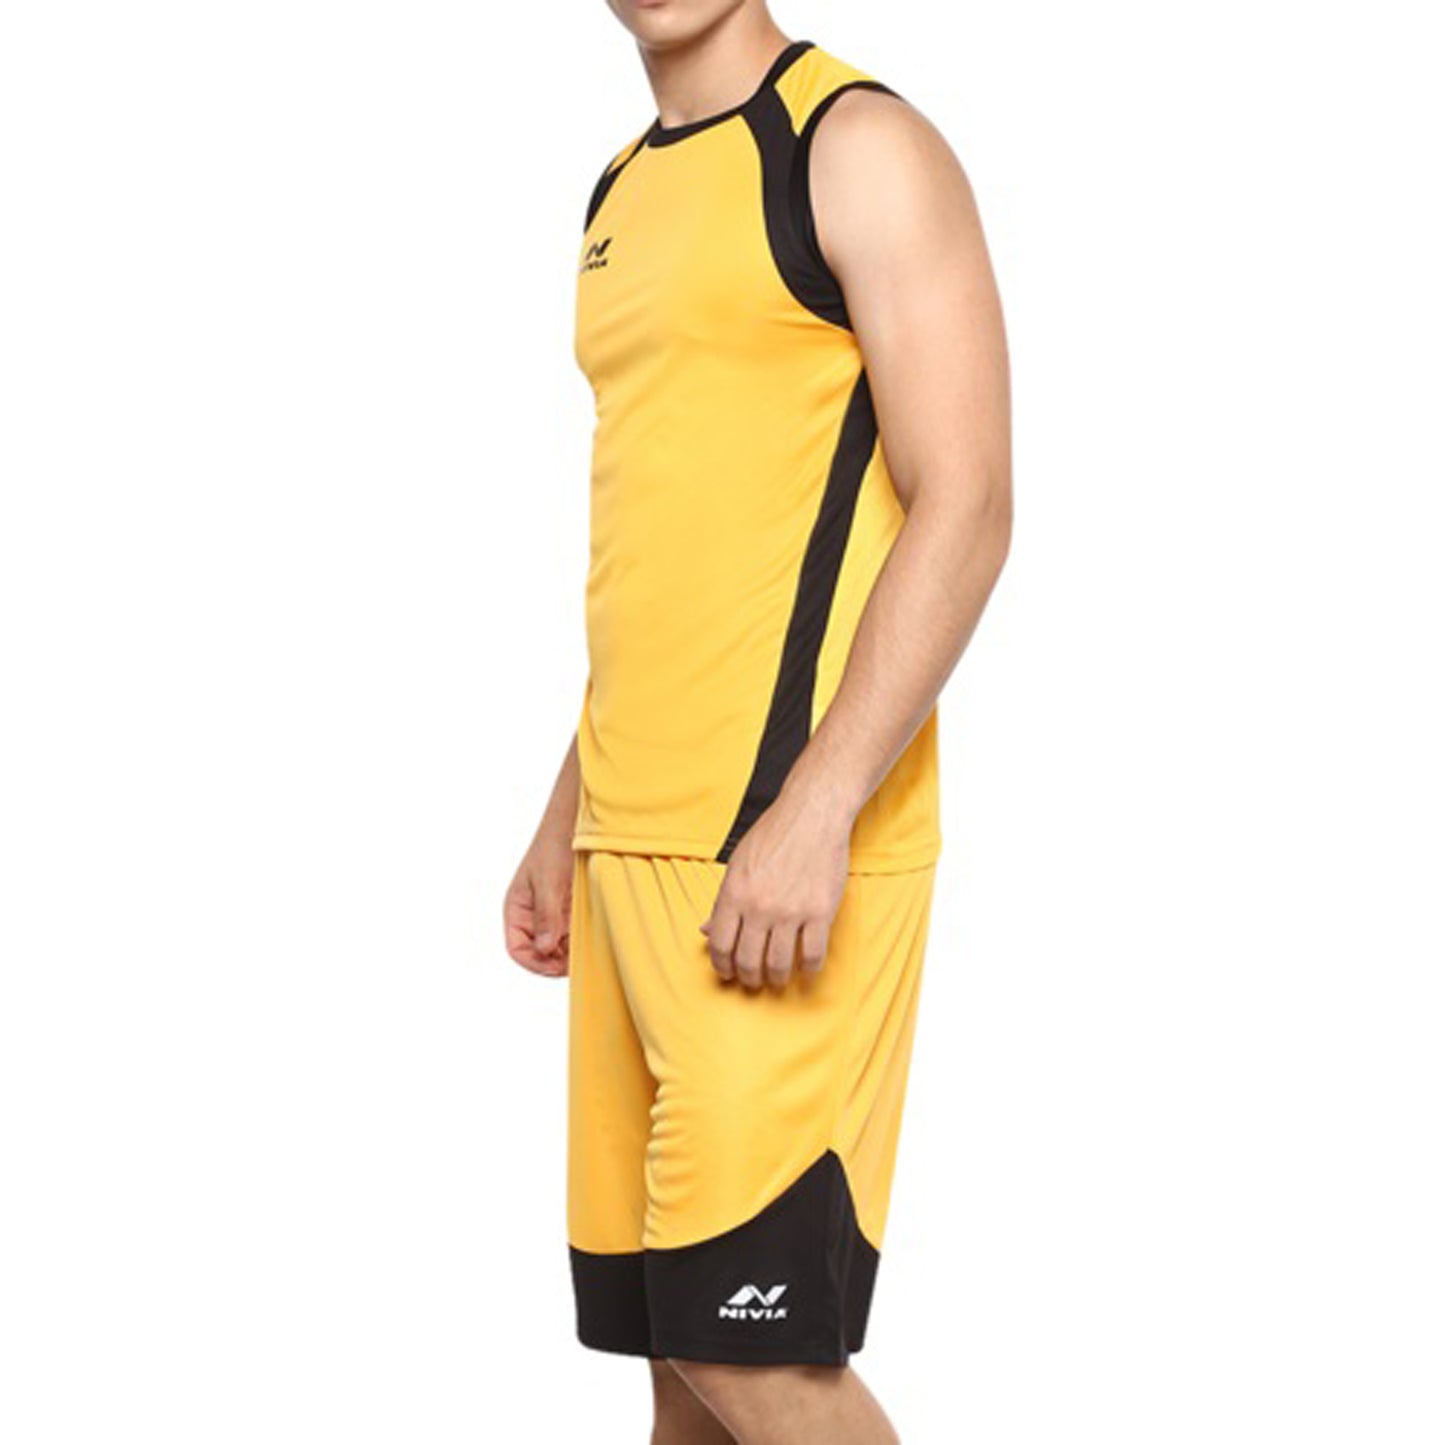 Nivia 2103 Phantom Jersey Set for Men, G.Yellow/Black - Best Price online Prokicksports.com